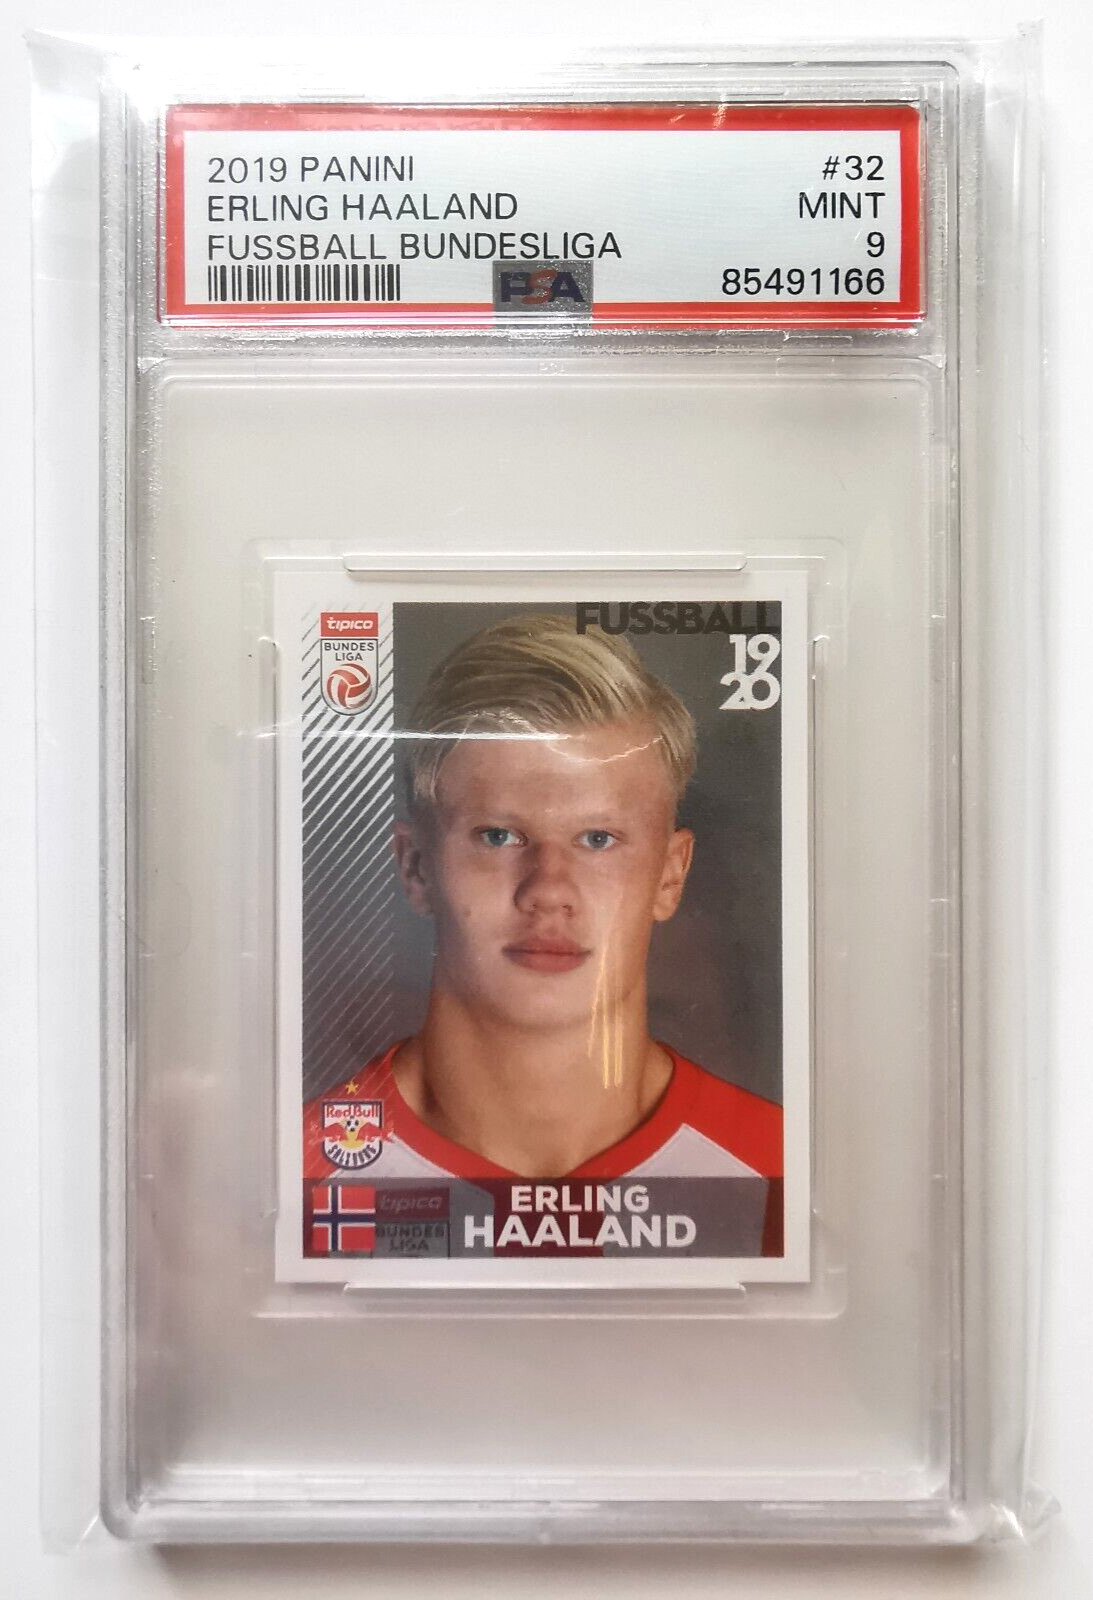 2019-20 Panini sticker football Bundesliga Erling Haaland rookie RC #32 Salzburg